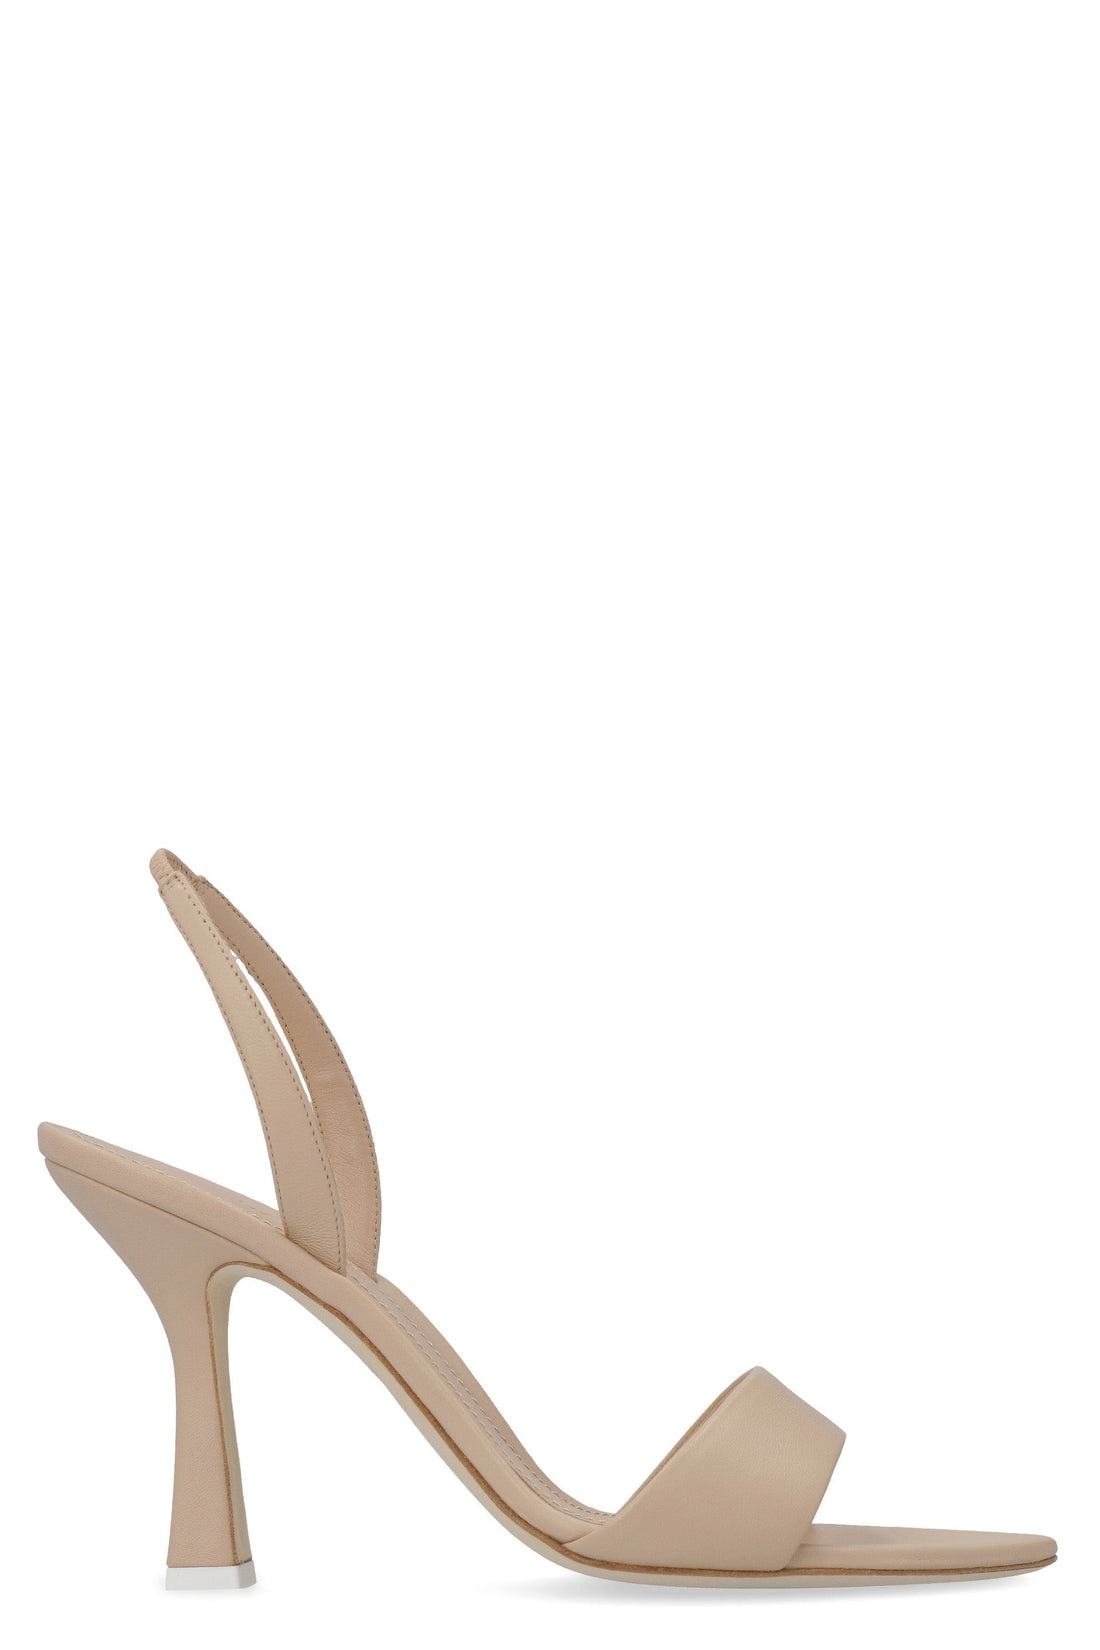 Piralo-OUTLET-SALE-Lily heeled sandals-ARCHIVIST